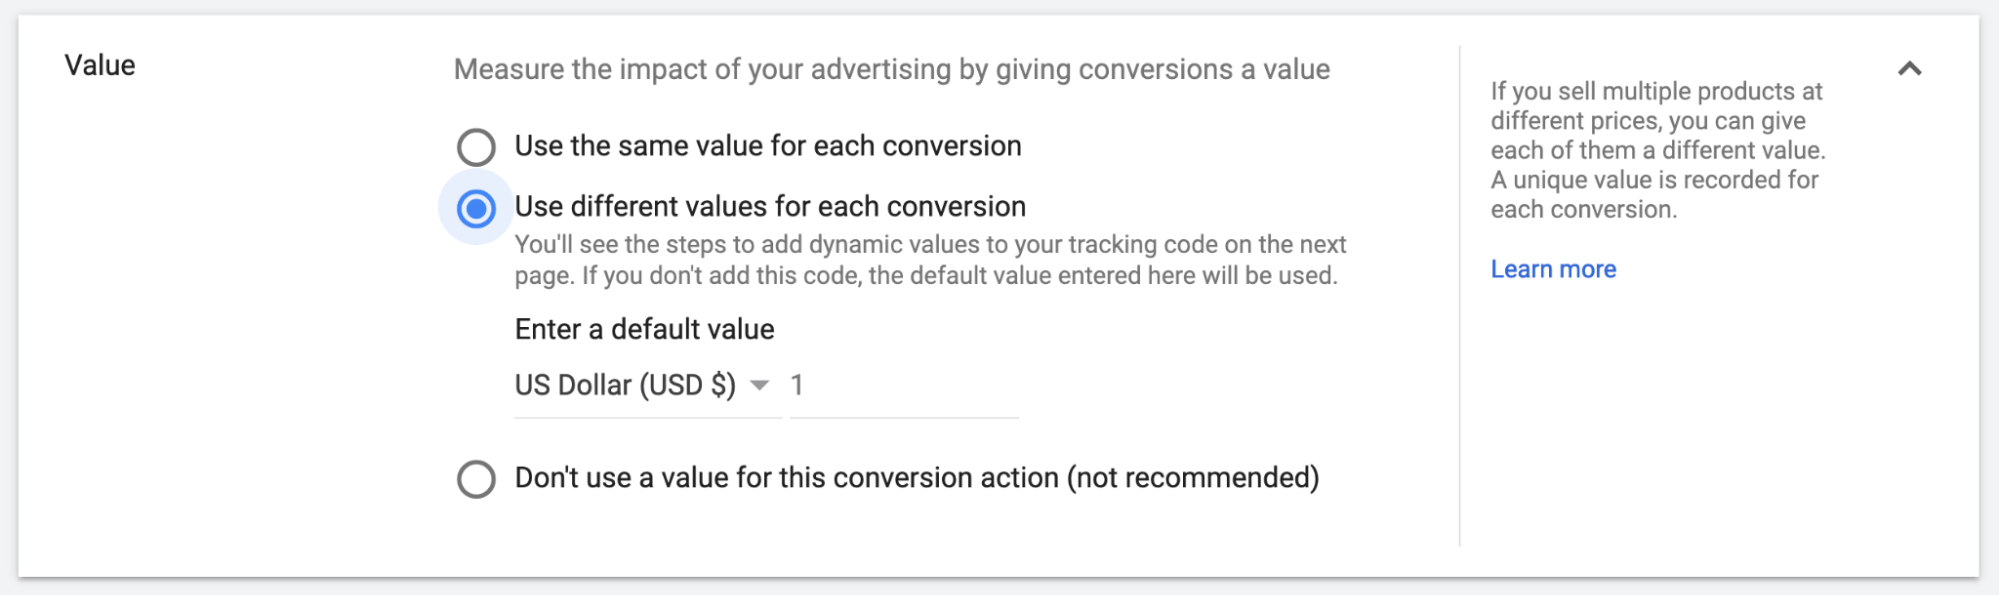 Google Ads Conversion Value Options